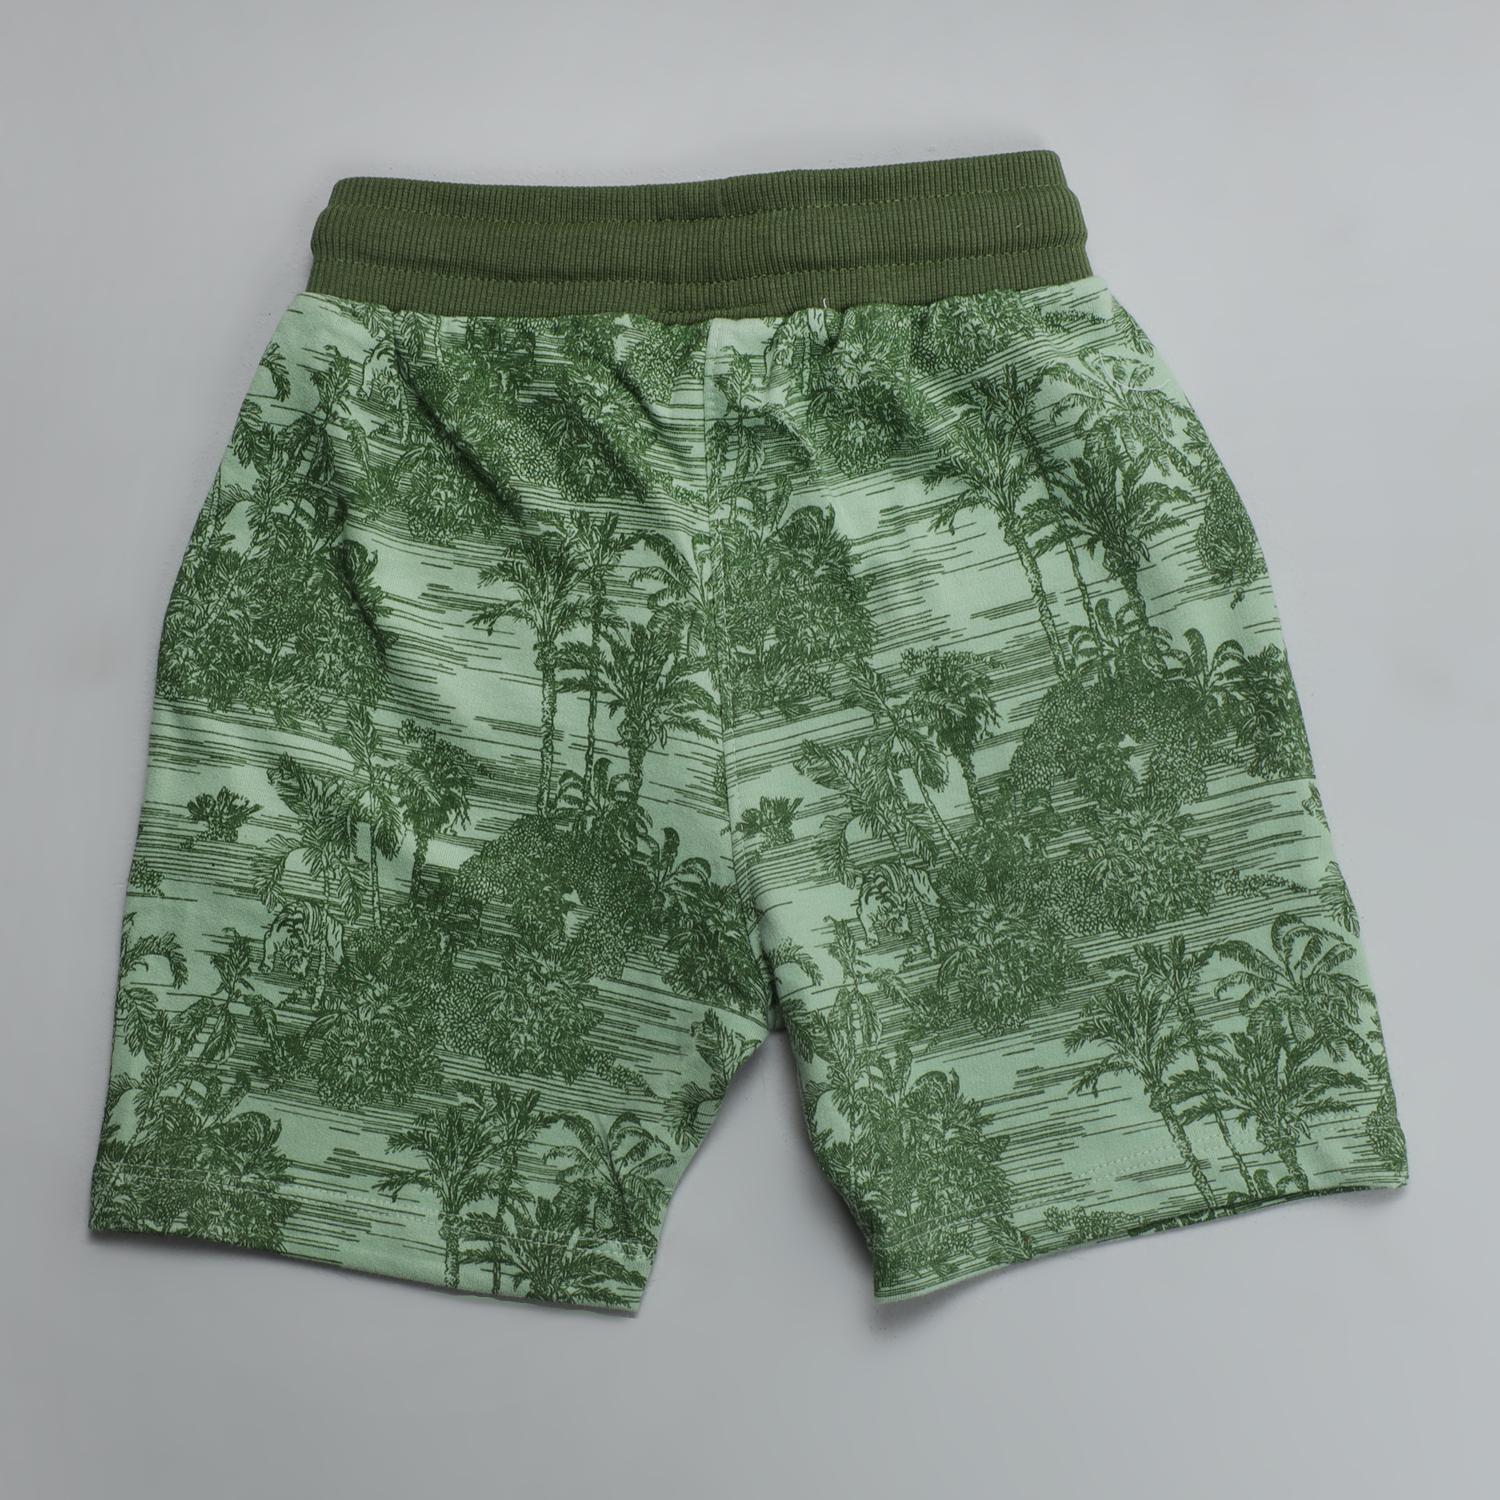 Clothing Boys Pattern Shorts-Green